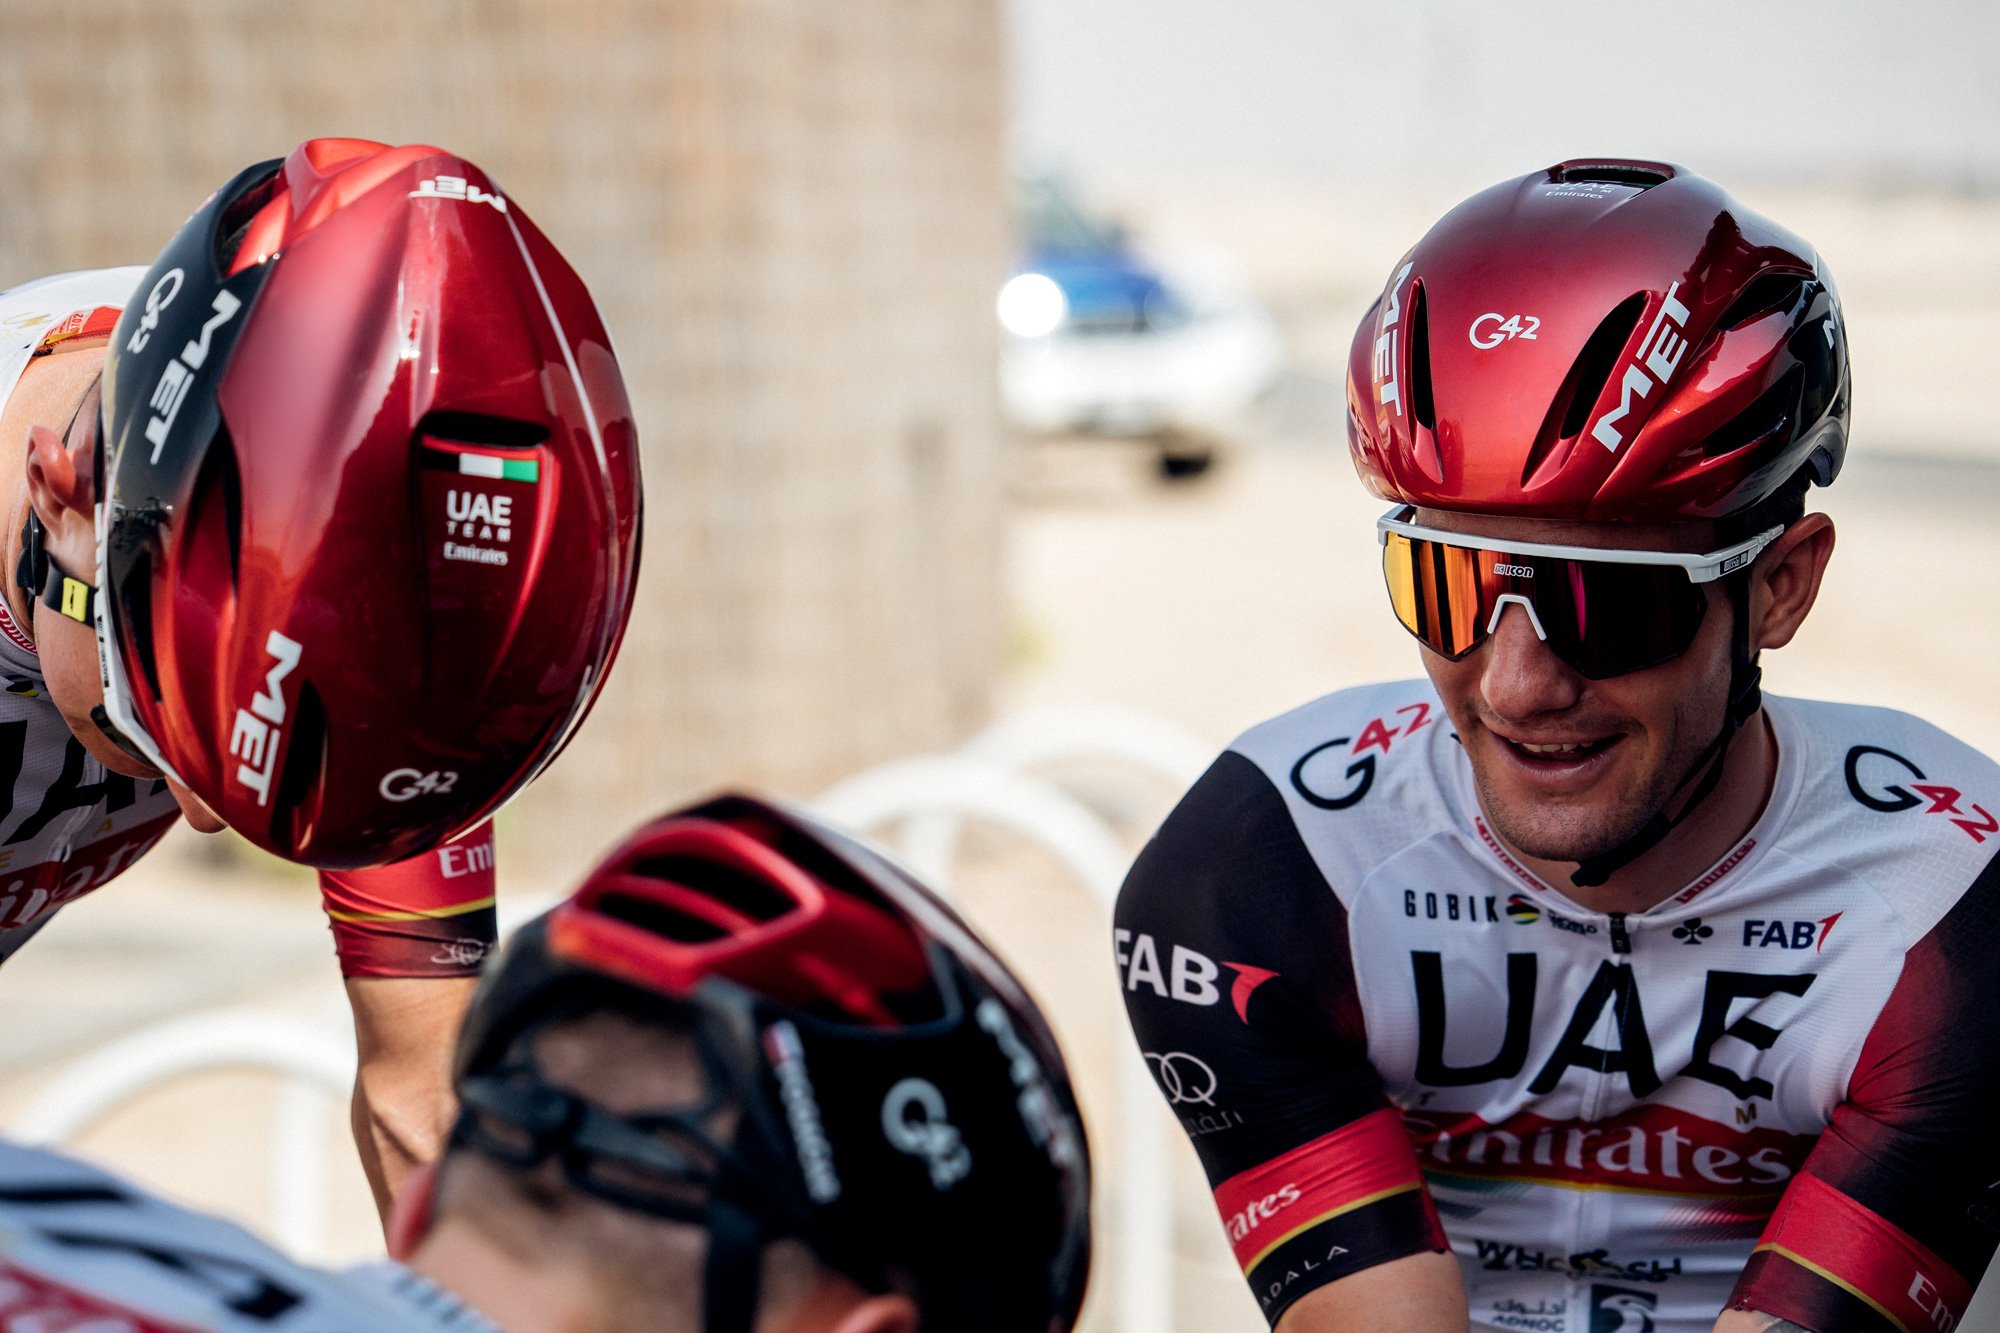 MET Manta Mips Road, Triathlon and Winter Rides Helmet: UAE Team Emirates